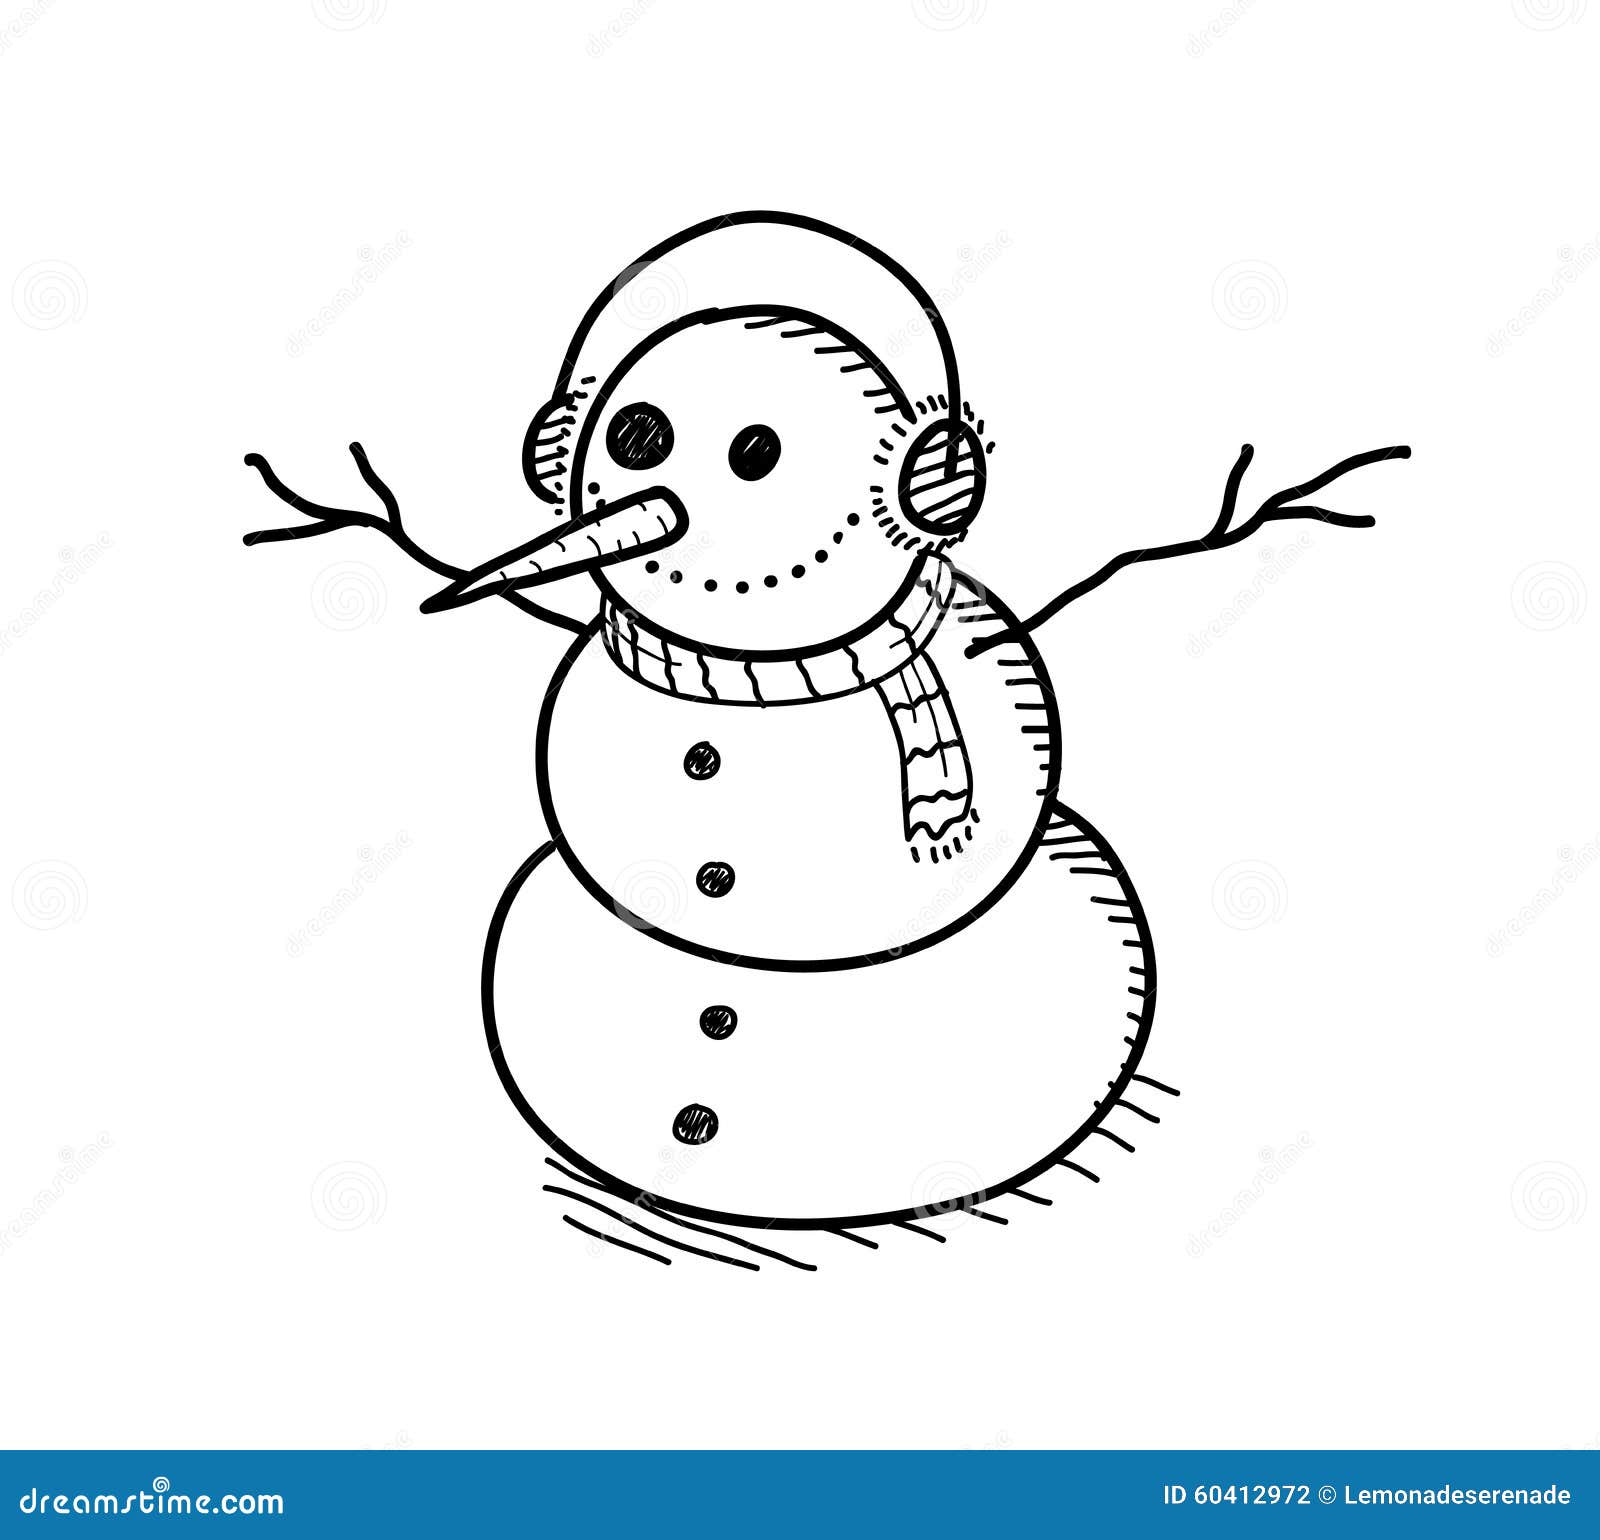 Snowman Doodle stock vector. Illustration of design, symbol - 60412972